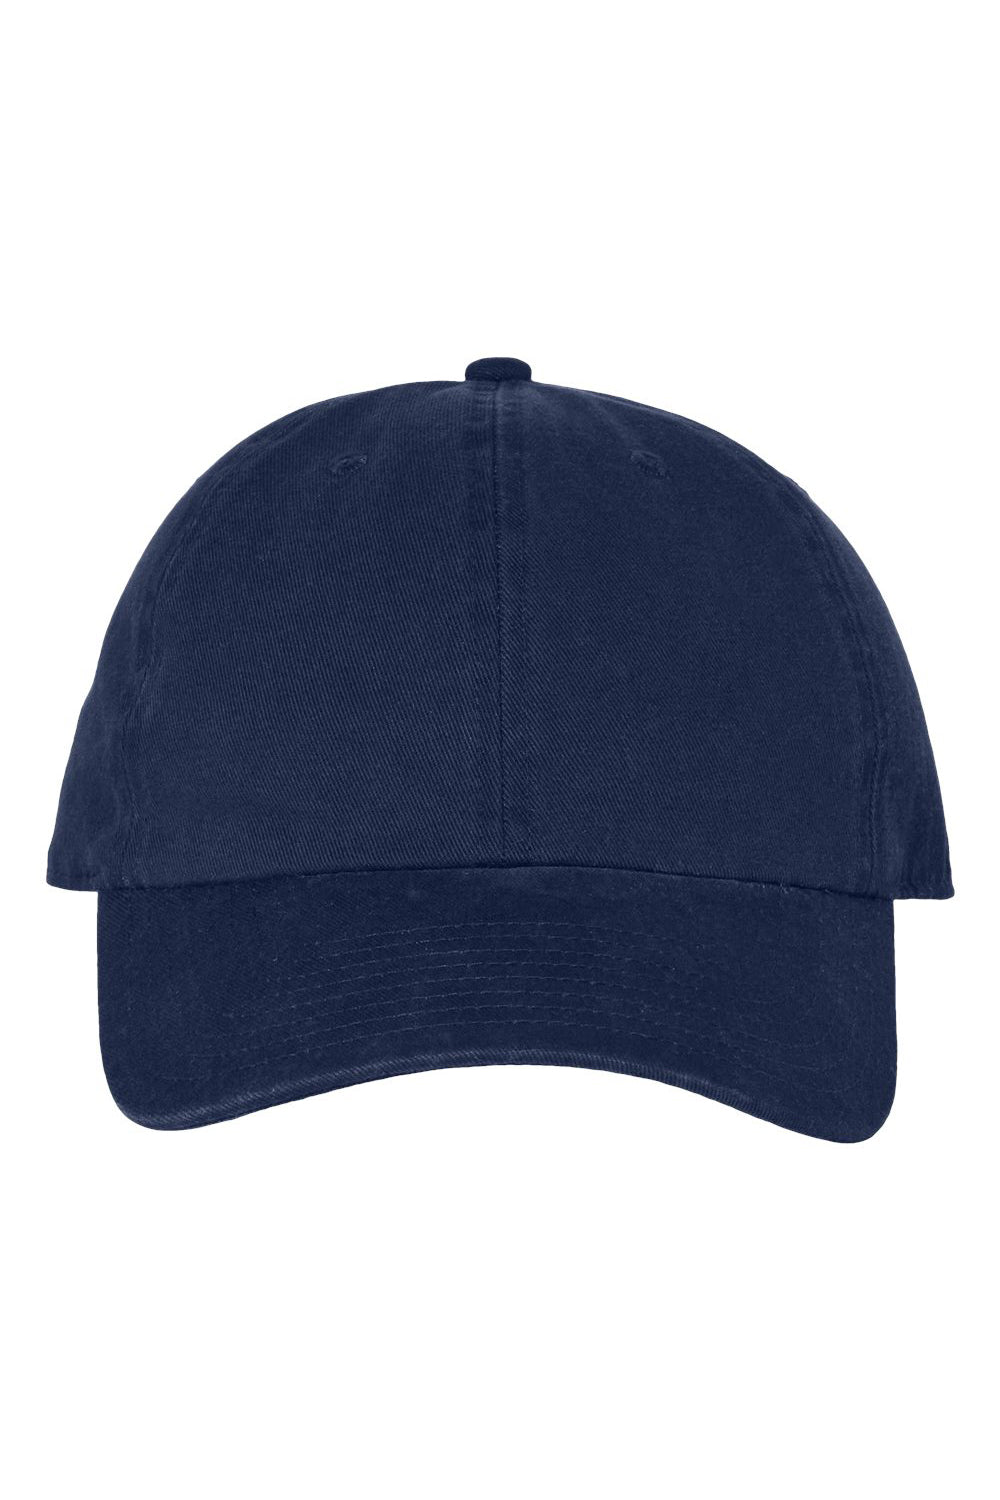 47 Brand 4700 Mens Clean Up Adjustable Hat Navy Blue Flat Front